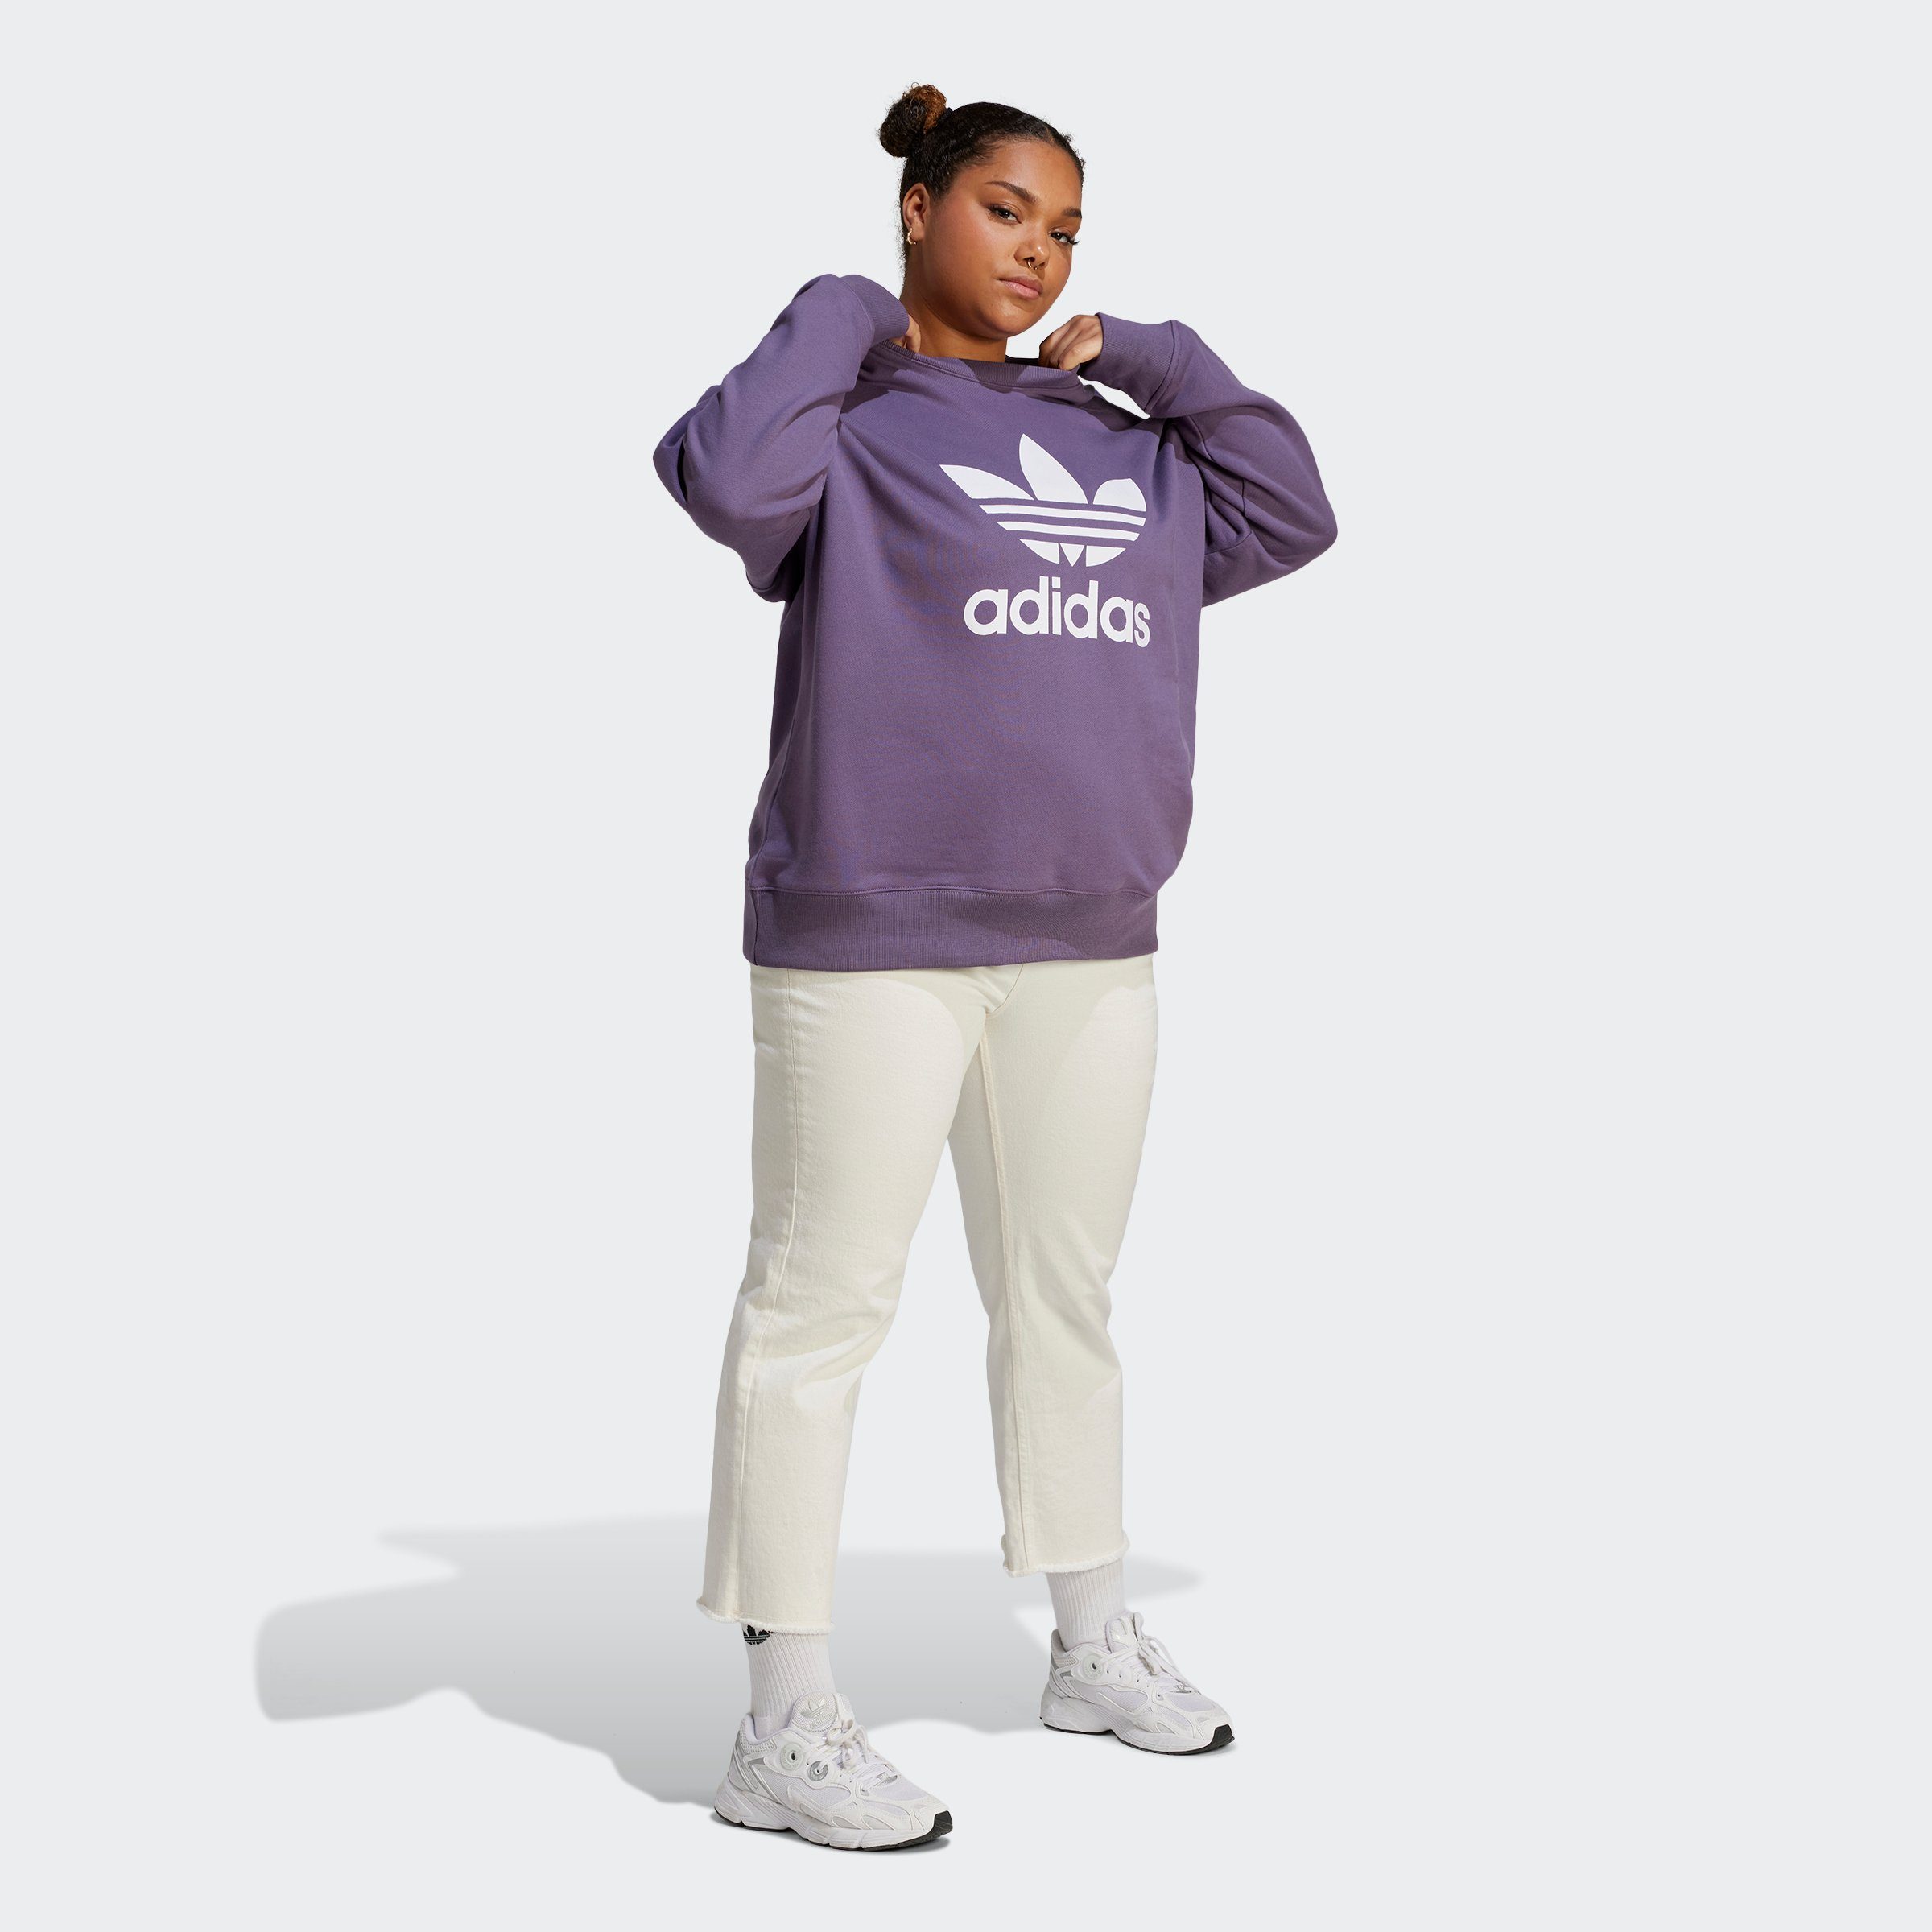 CREW Originals adidas SWEAT Sweatshirt TRF